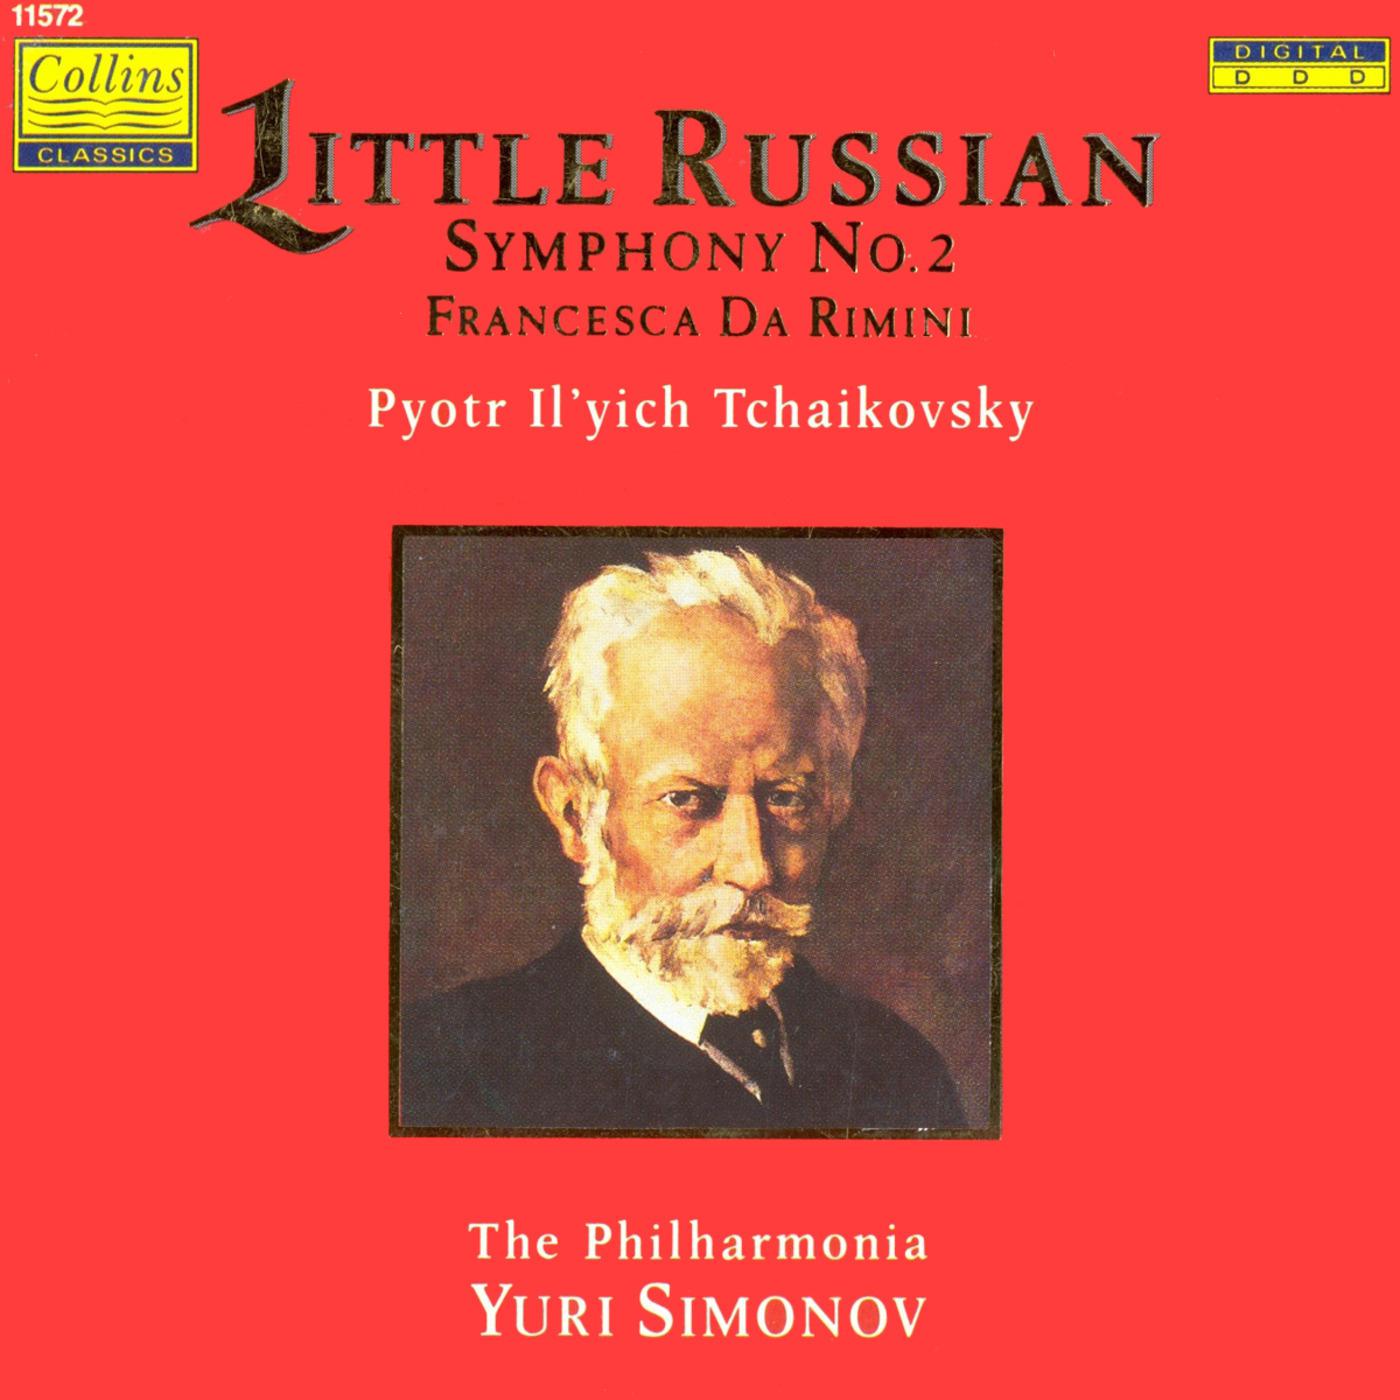 Symphony No. 2 in C Minor, Op. 17, "Little Russian": IV. Finale: Moderato assai - Allegro vivo